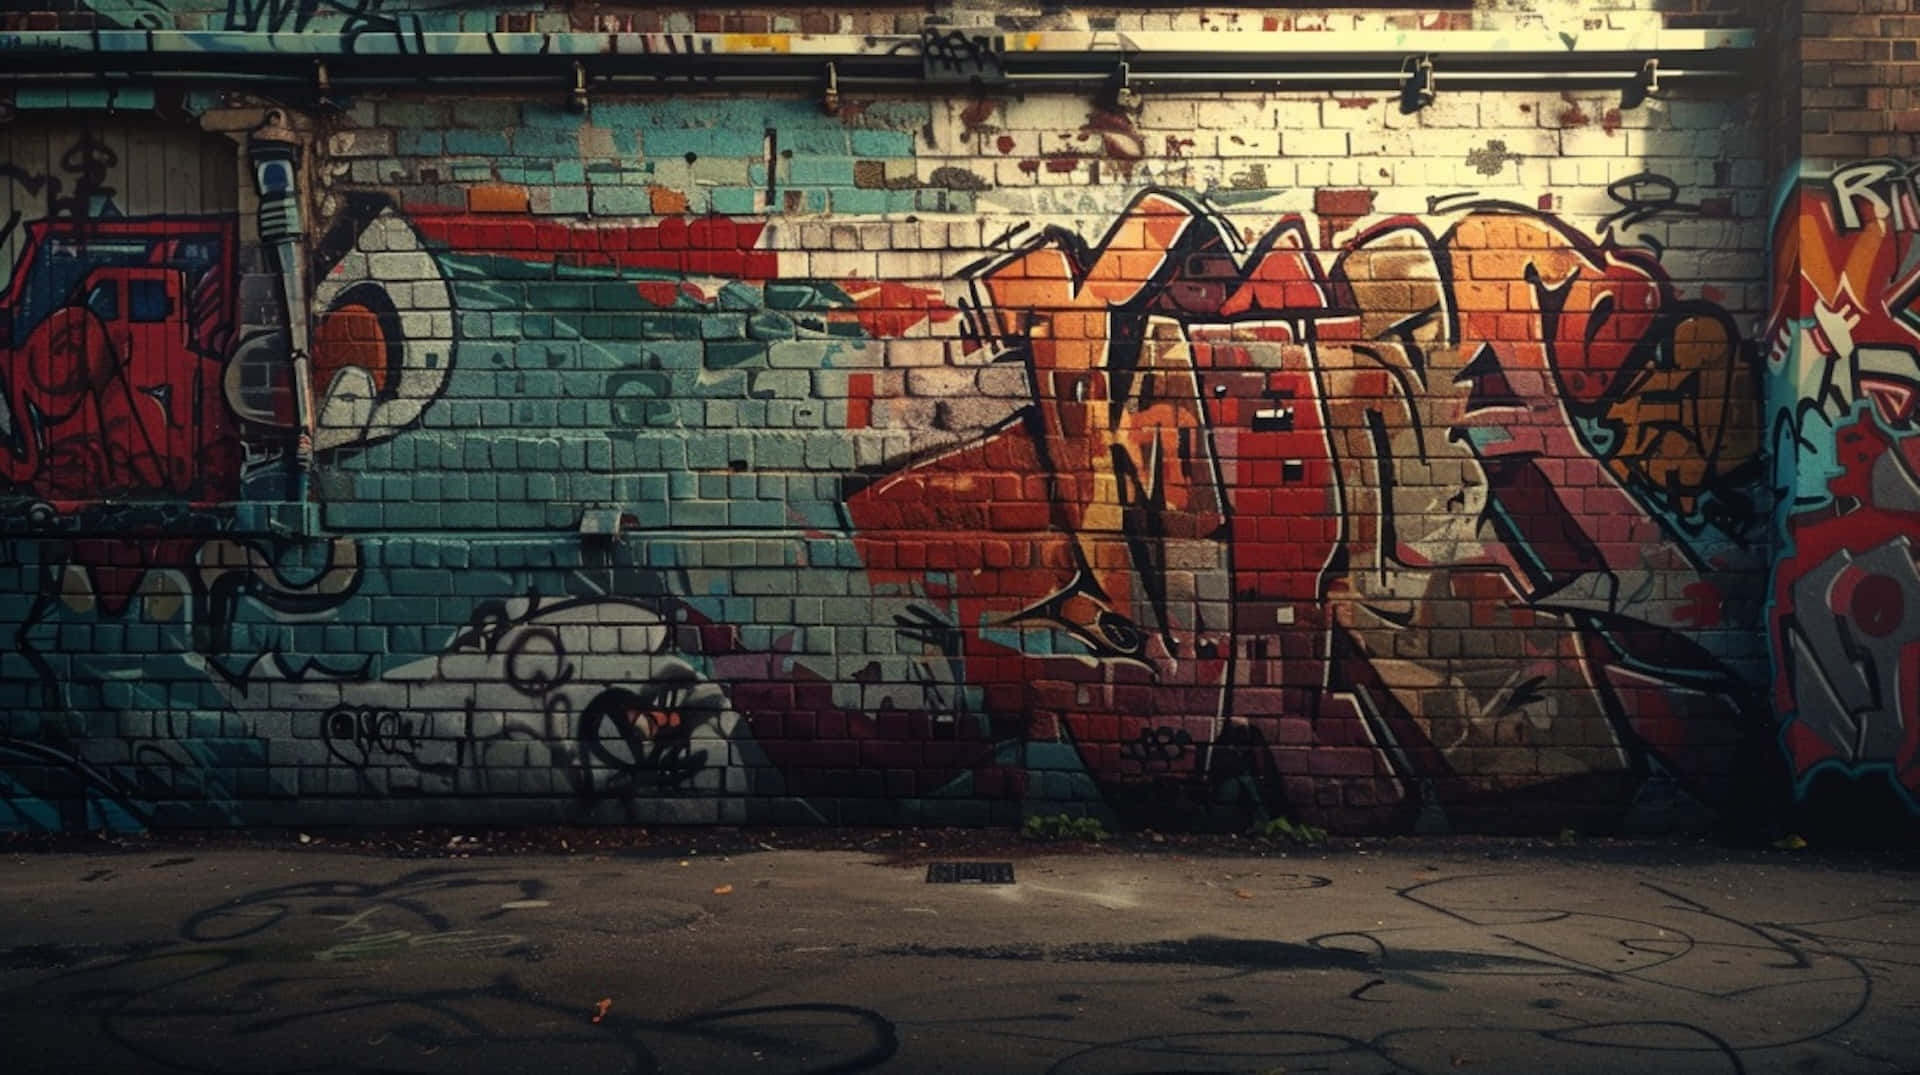 Urban Graffiti Art Wall.jpg Wallpaper